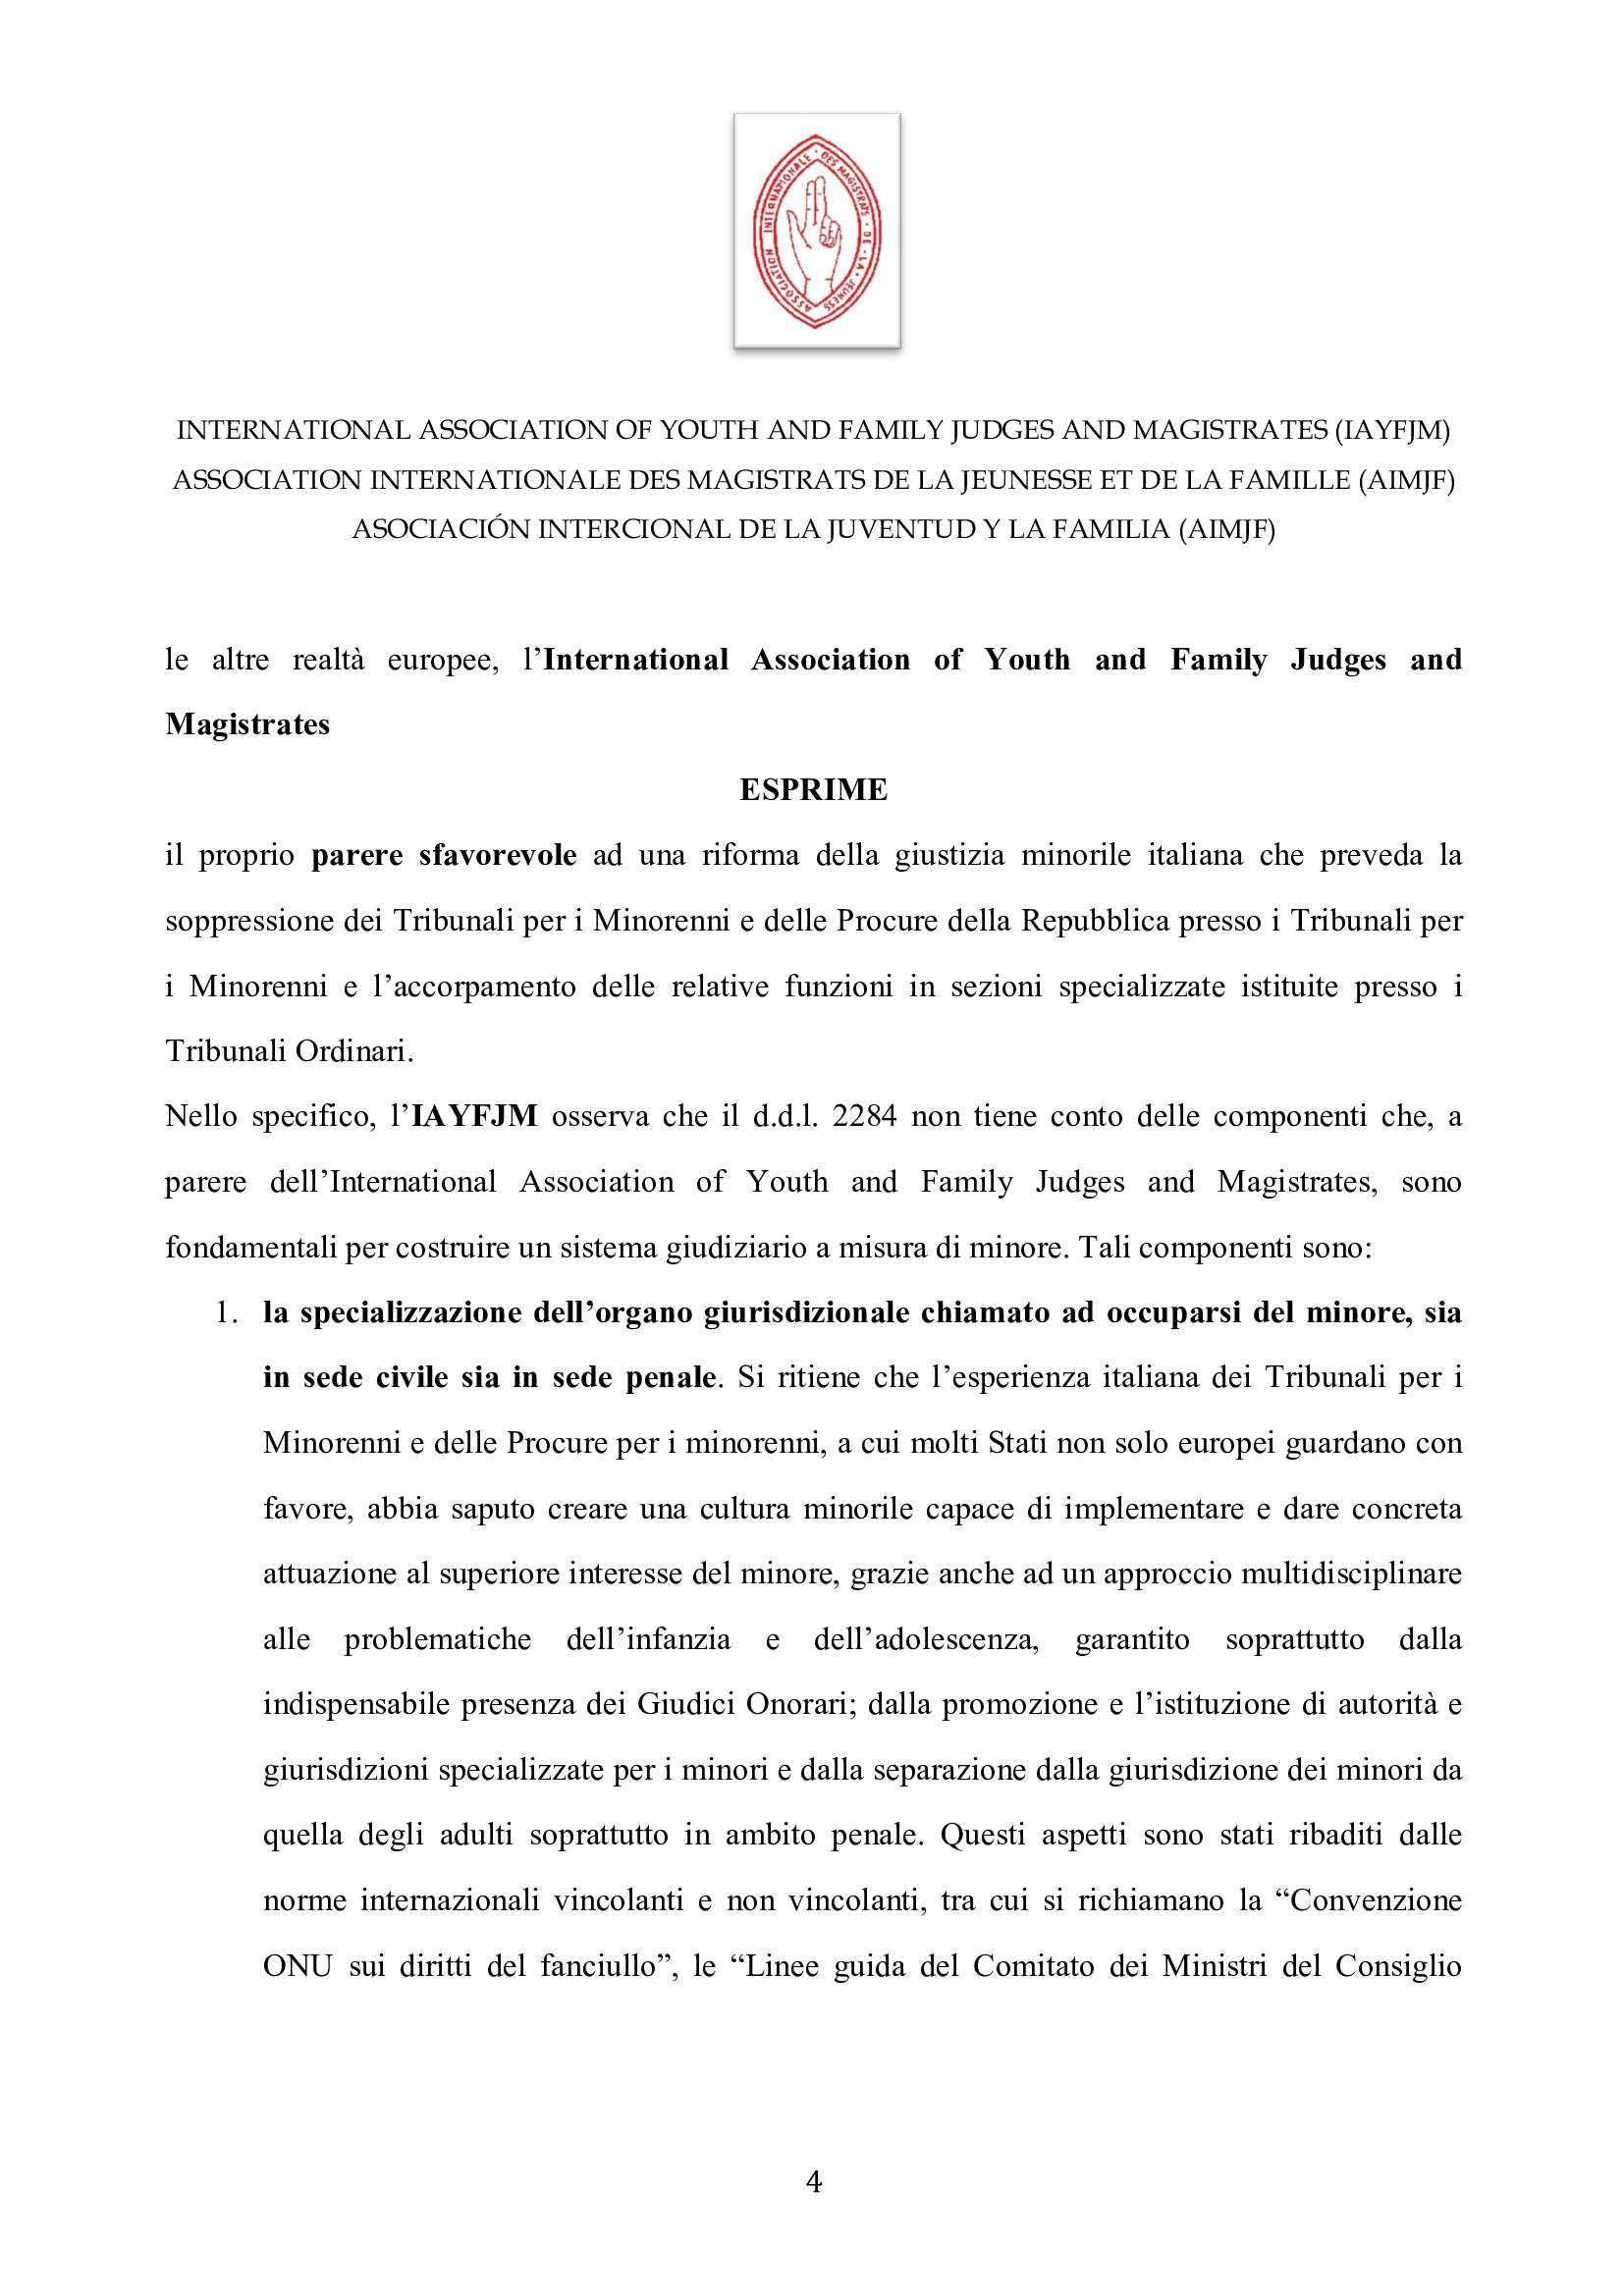 IAYFJM Statement on the Italian Juvenile Justice R 003